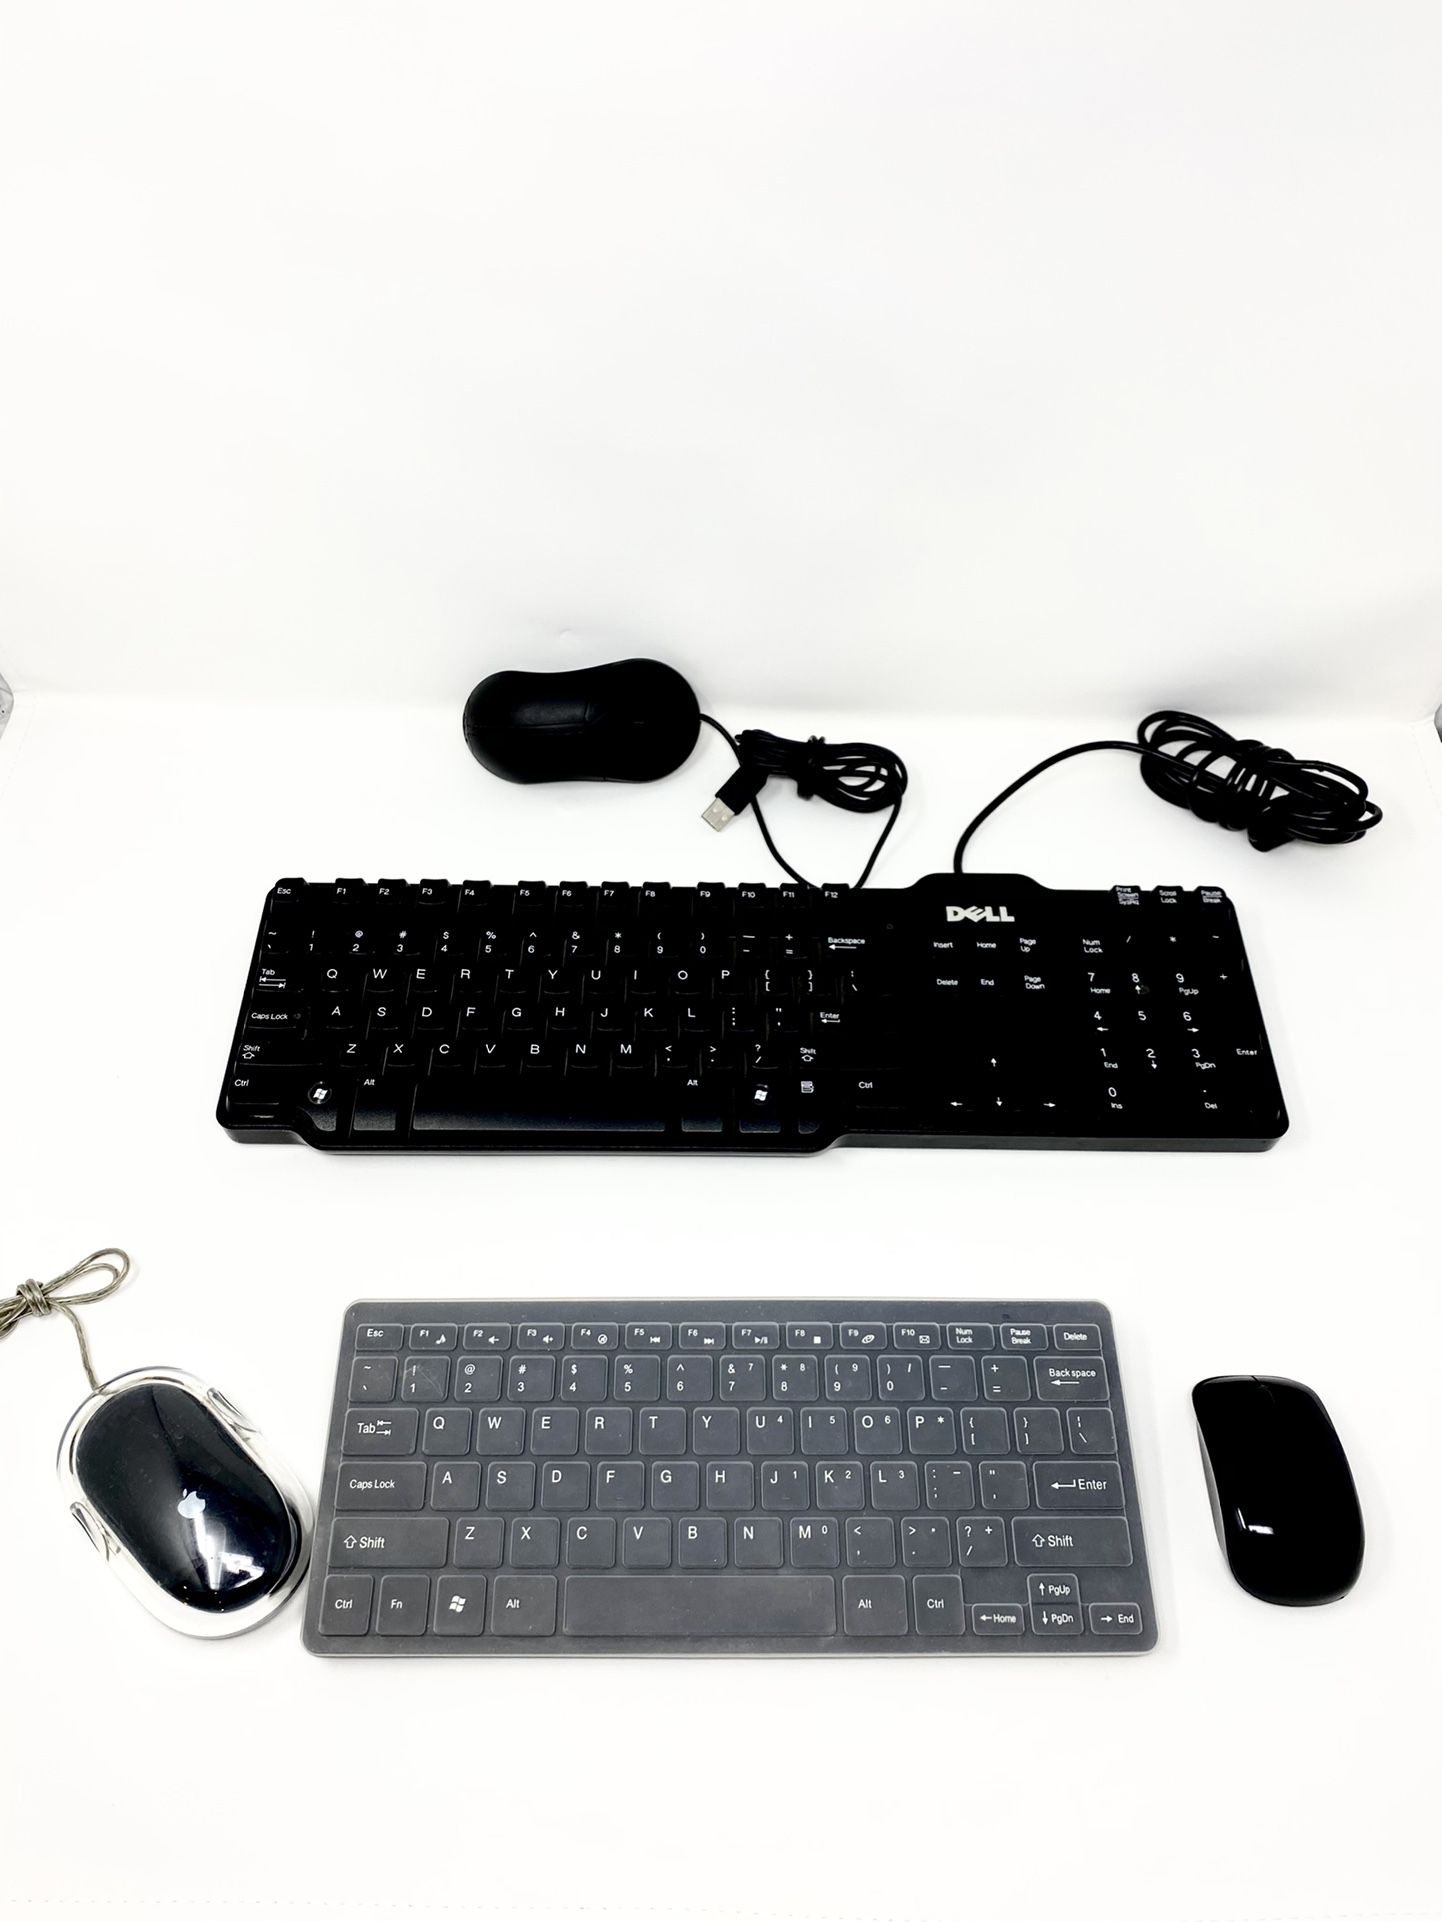 Wireless Keyboard and Mouse Combo, WisFox 2.4G Full-Size Slim Thin Wireless Keyboard